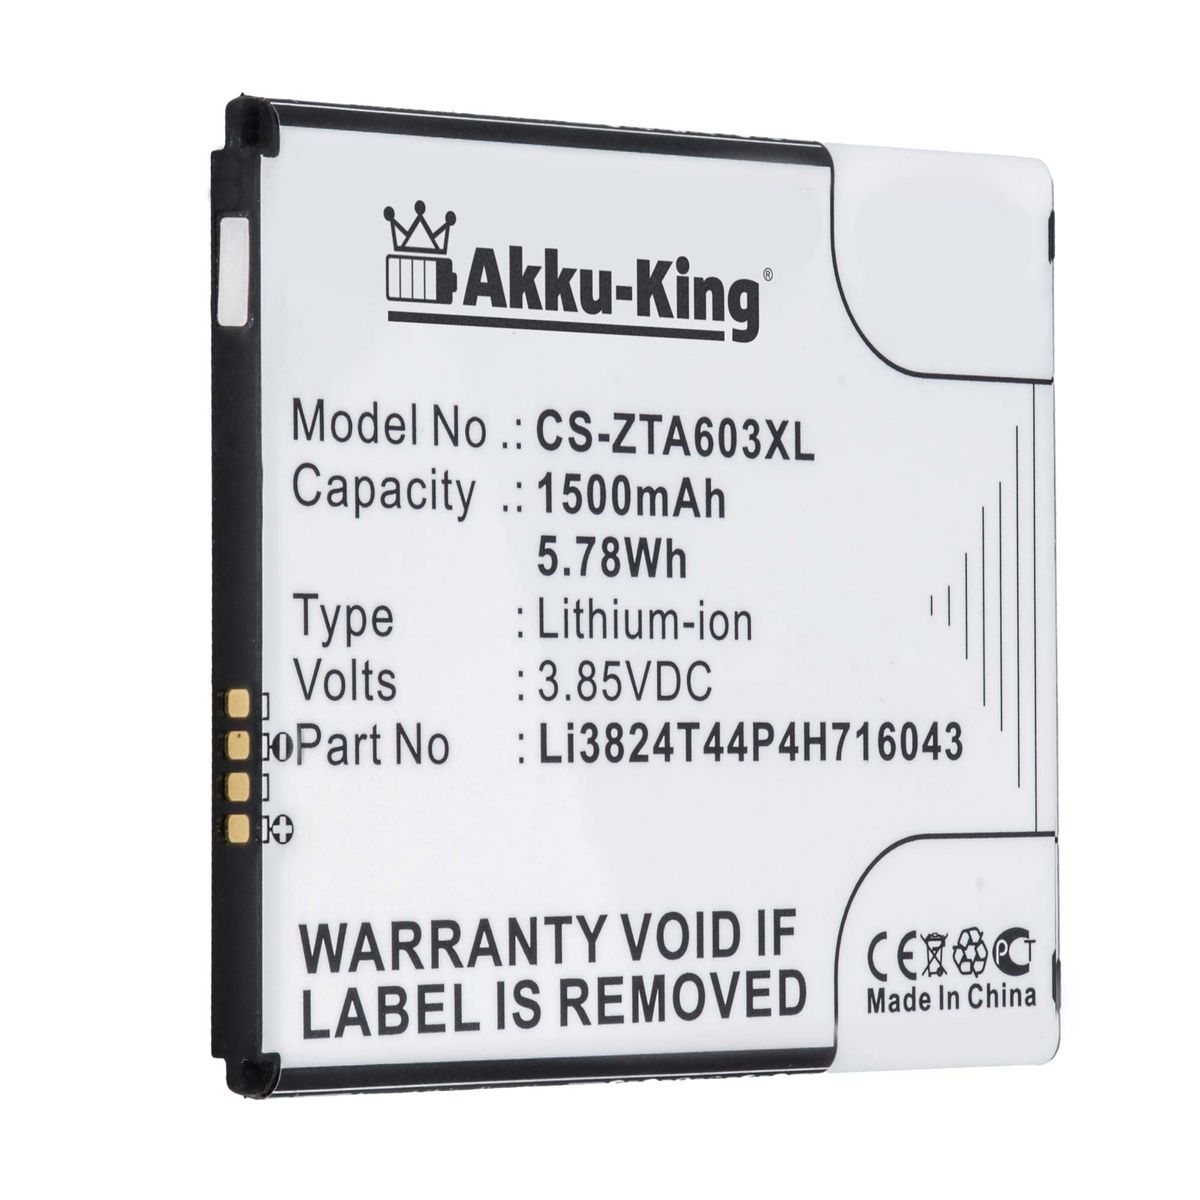 AKKU-KING Akku kompatibel mit Li3824T44P4H716043 3.85 Li-Ion ZTE 1500mAh Handy-Akku, Volt